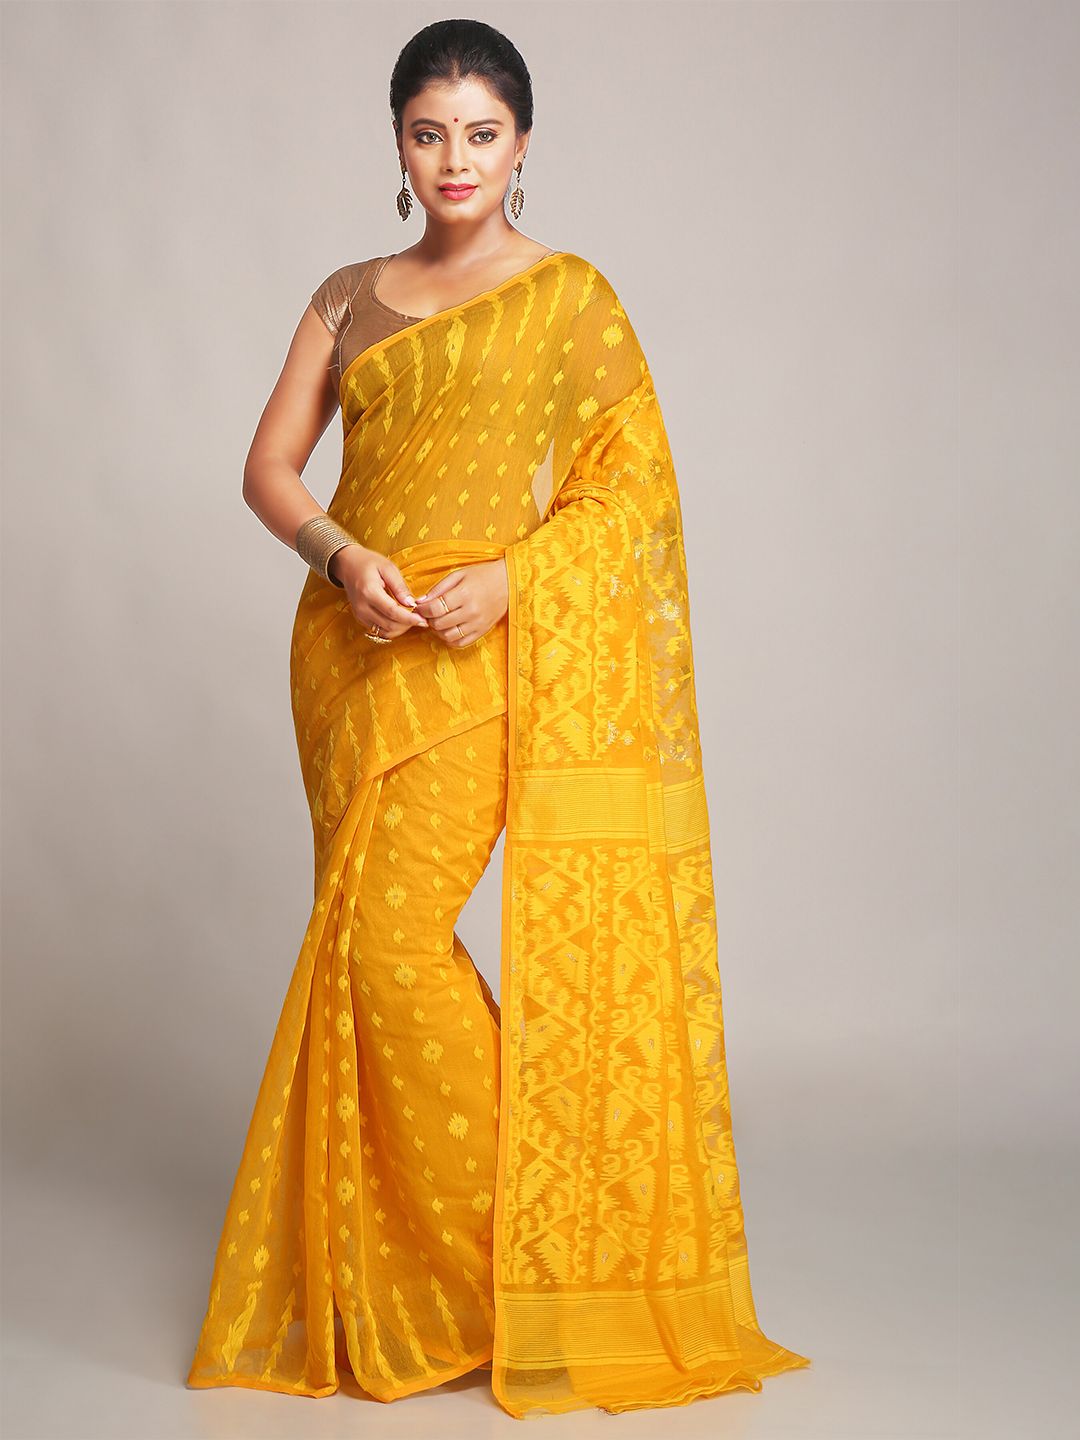 BENGAL HANDLOOM Yellow Ethnic Woven Design Cotton Silk Jamdani Saree Price in India